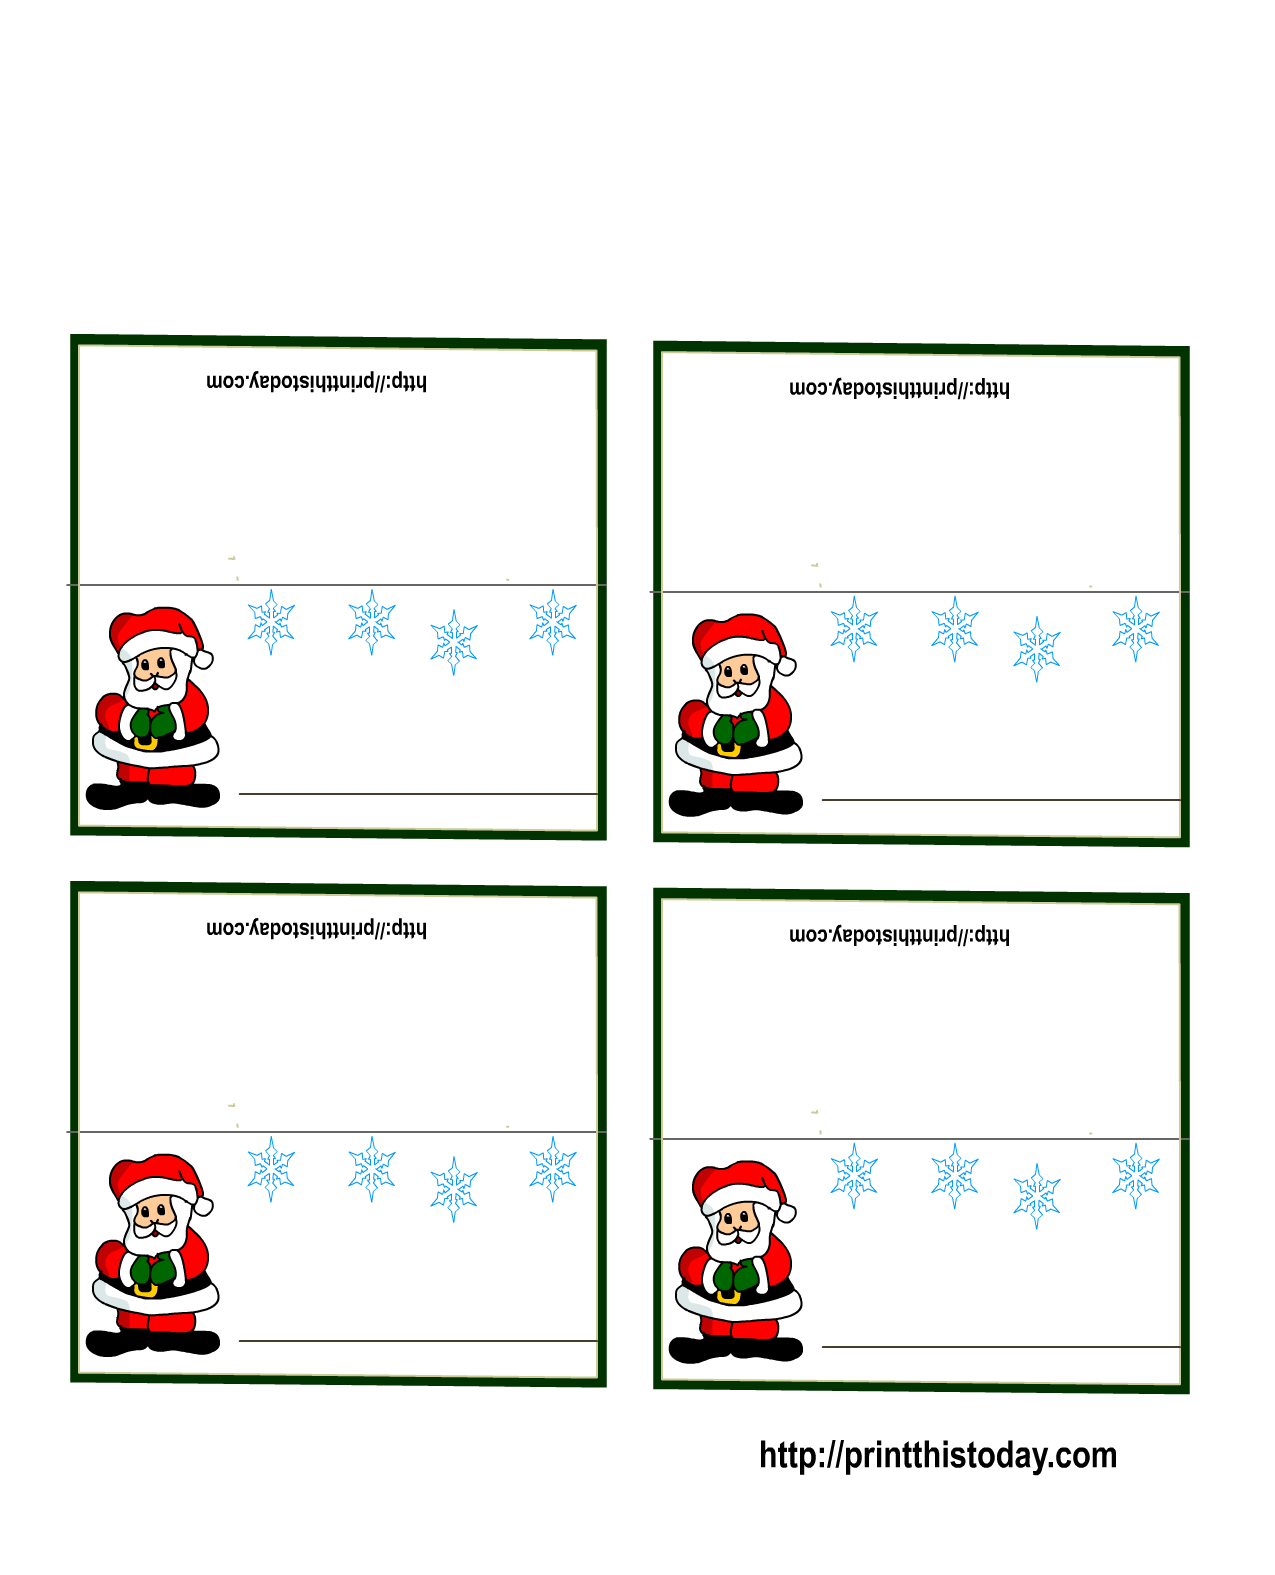 Free Printable Christmas Place Cards